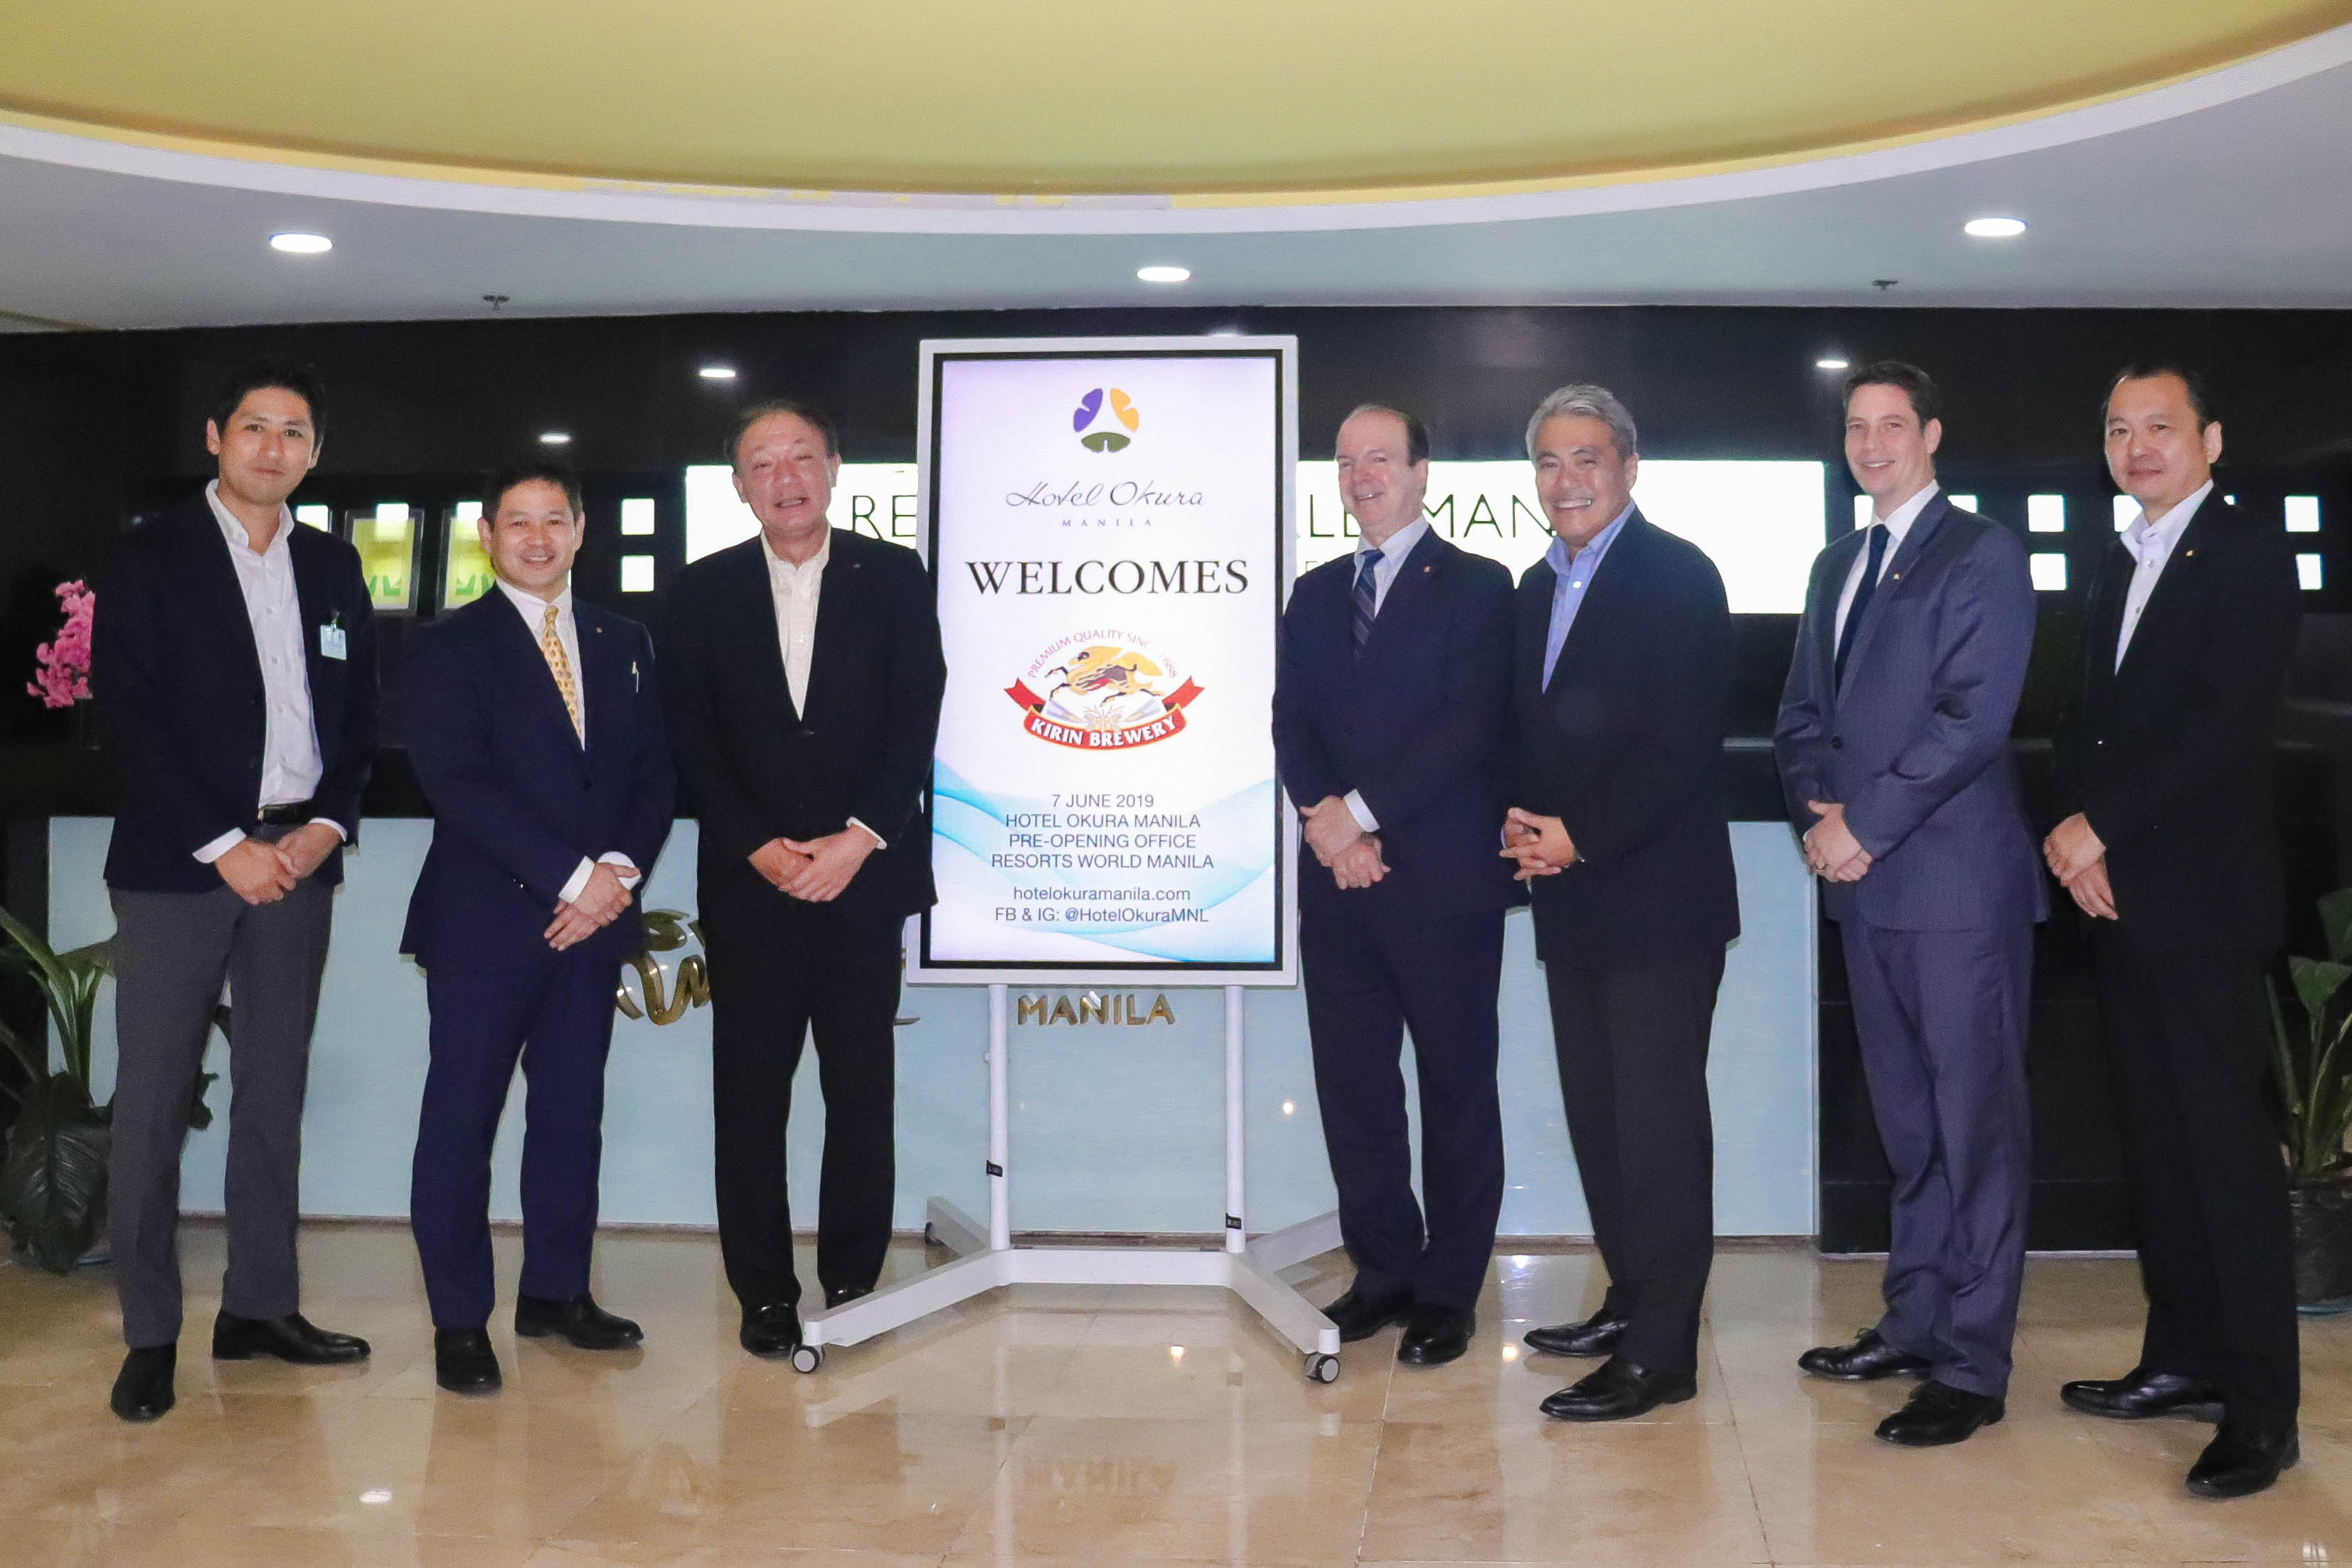 Hotel Okura Manila Welcomes Kirin Brewery at Resorts World Manila